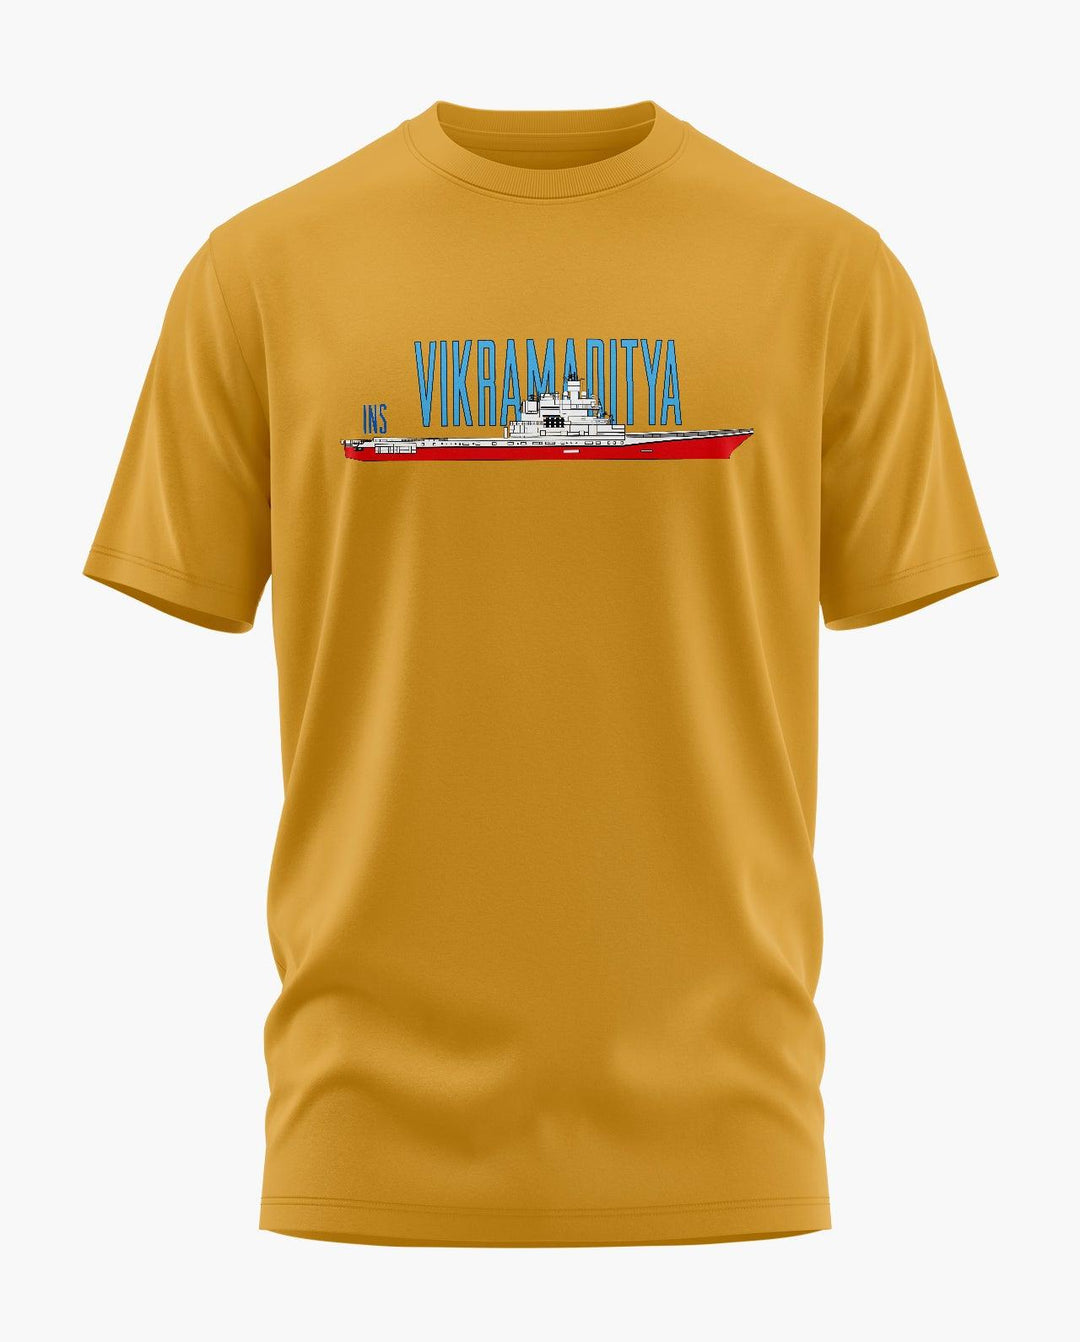 INS Vikramaditya T-Shirt - Aero Armour